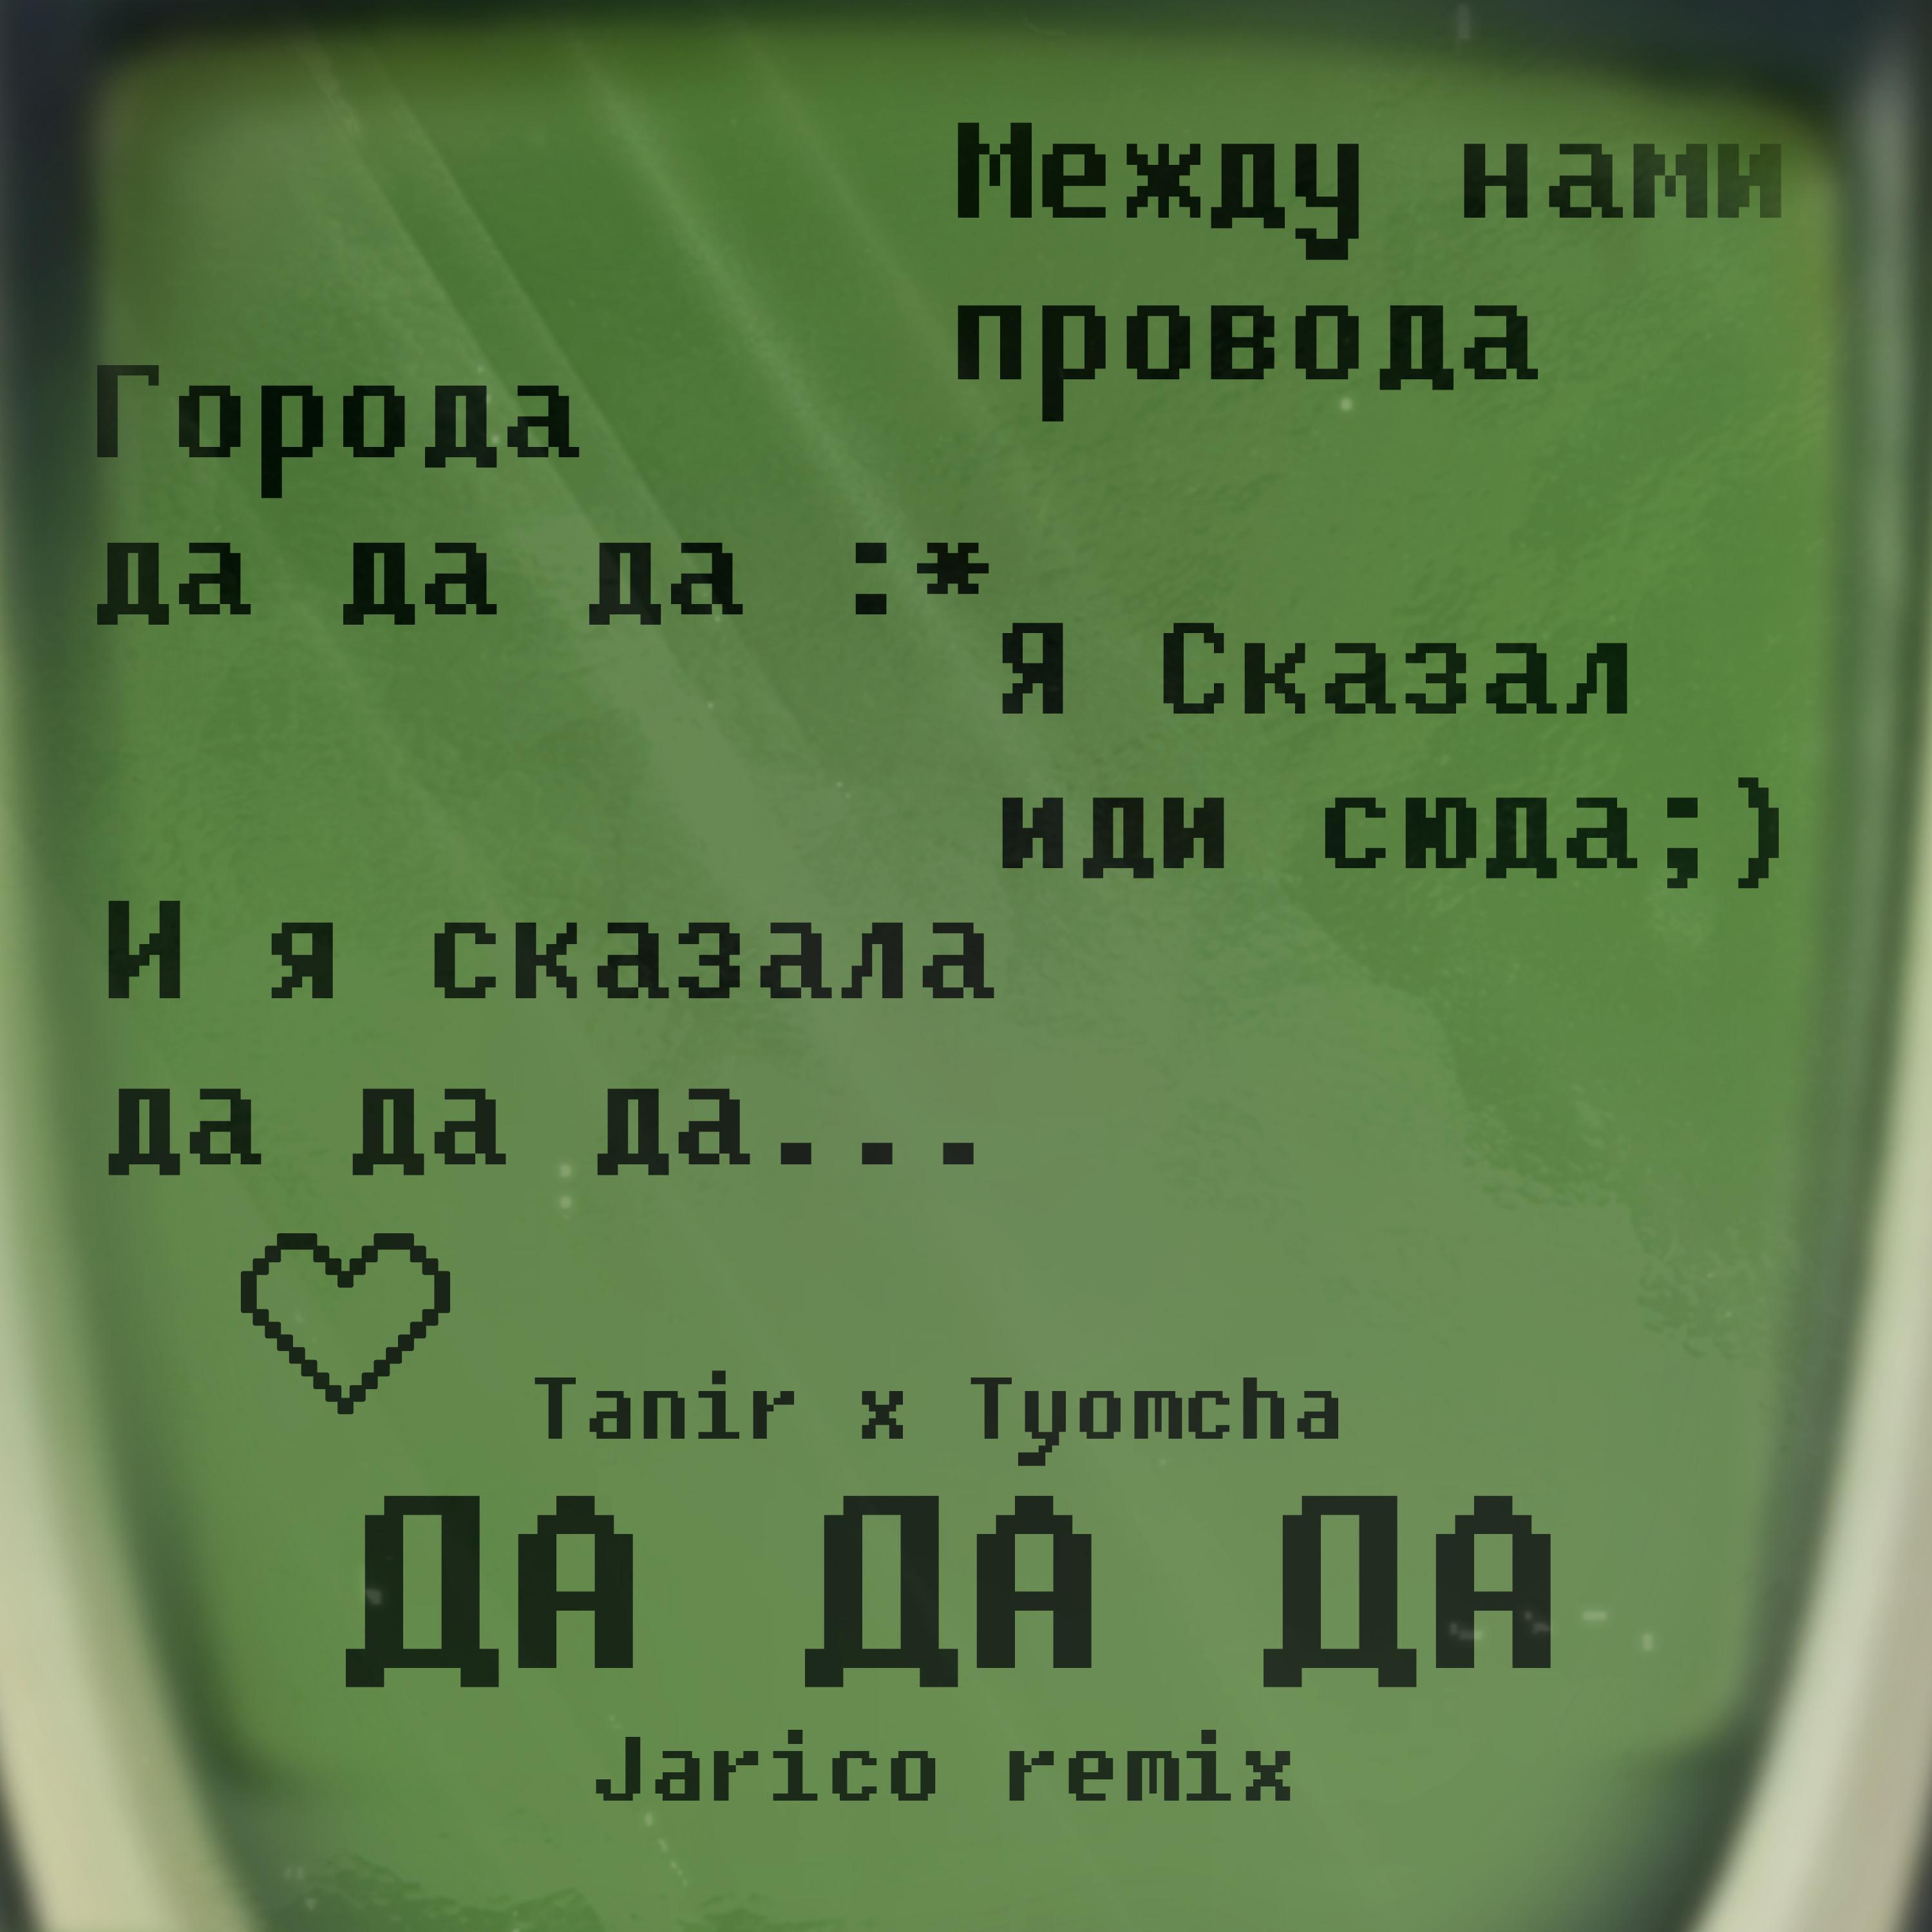 Музыка между песнями. Tanir Tyomcha да да да. Tanir & Tyomcha - da da da (Jarico Remix). Da da da Tanir Tyomcha текст. Да да да (Jarico Remix).